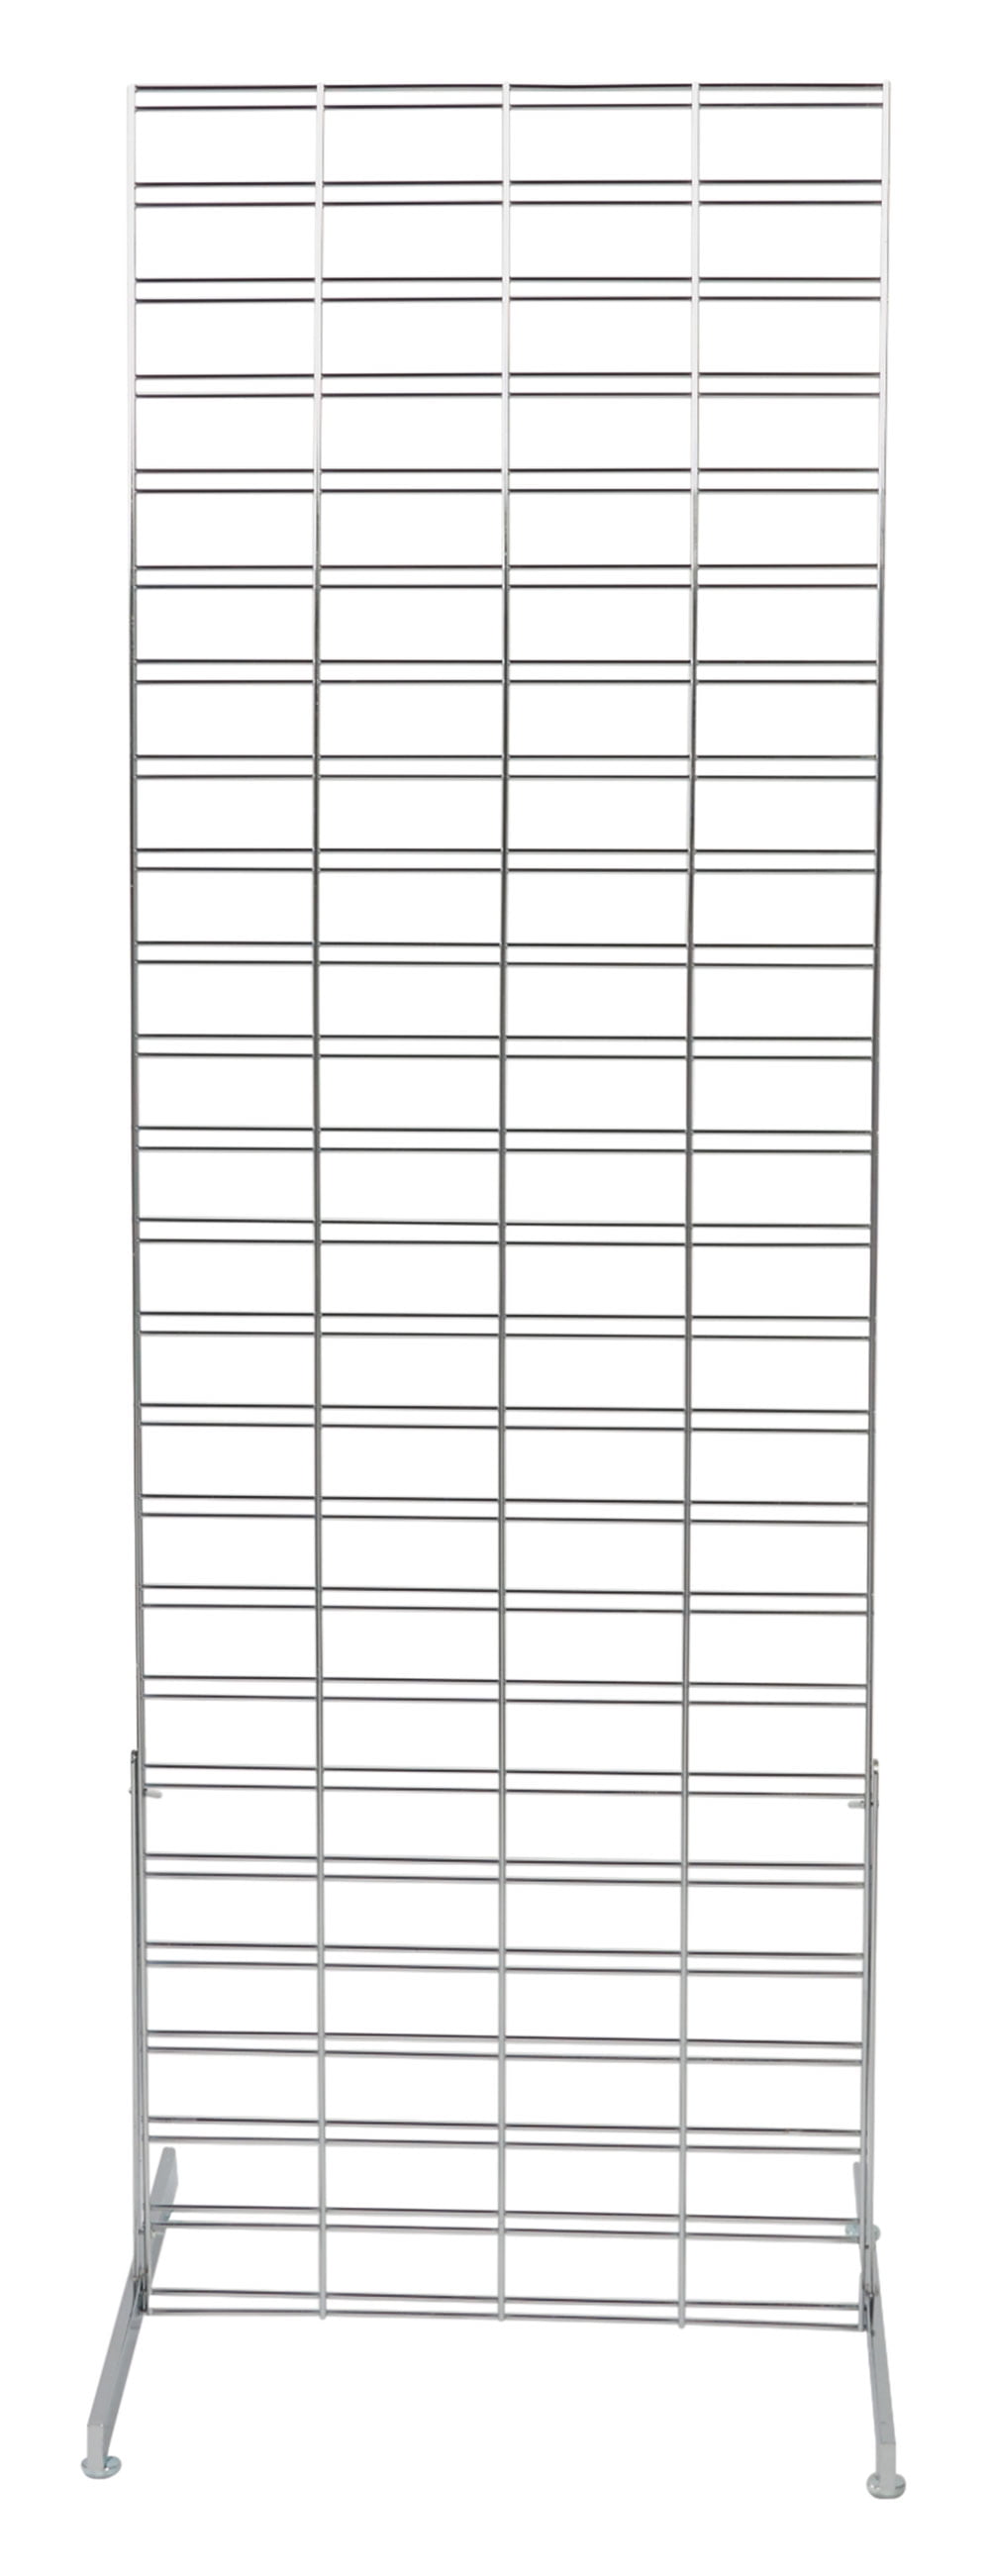 Chrome Slat Grid Standing Grid Screen Grid Wall Unit 2 x 6 Foot 